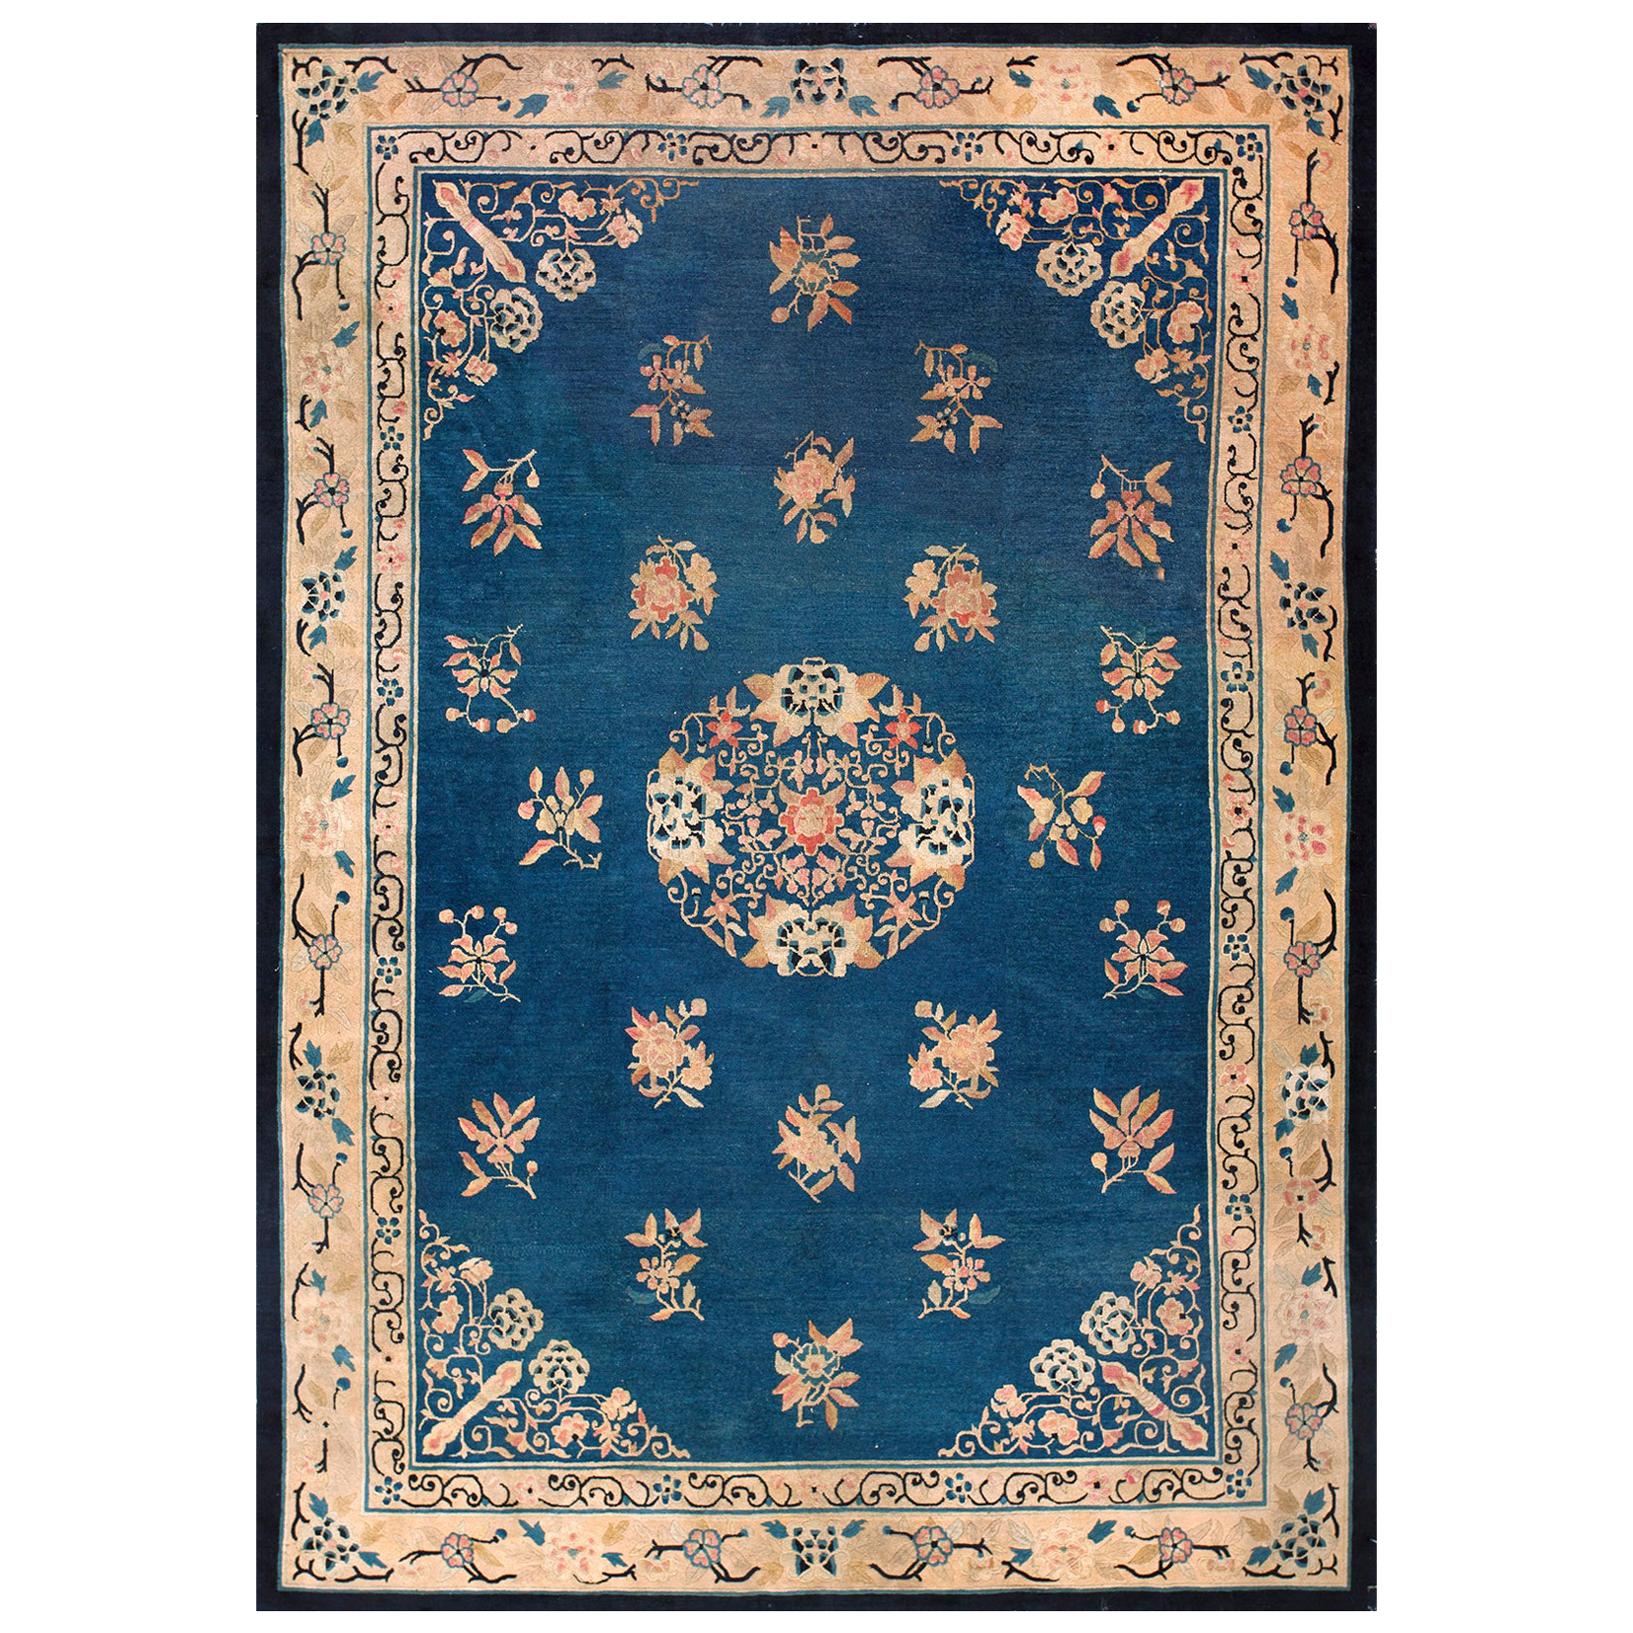 Late 19th Century Peking Chinese Carpet ( 6'2" x 8'8" - 188 x 264 cm )